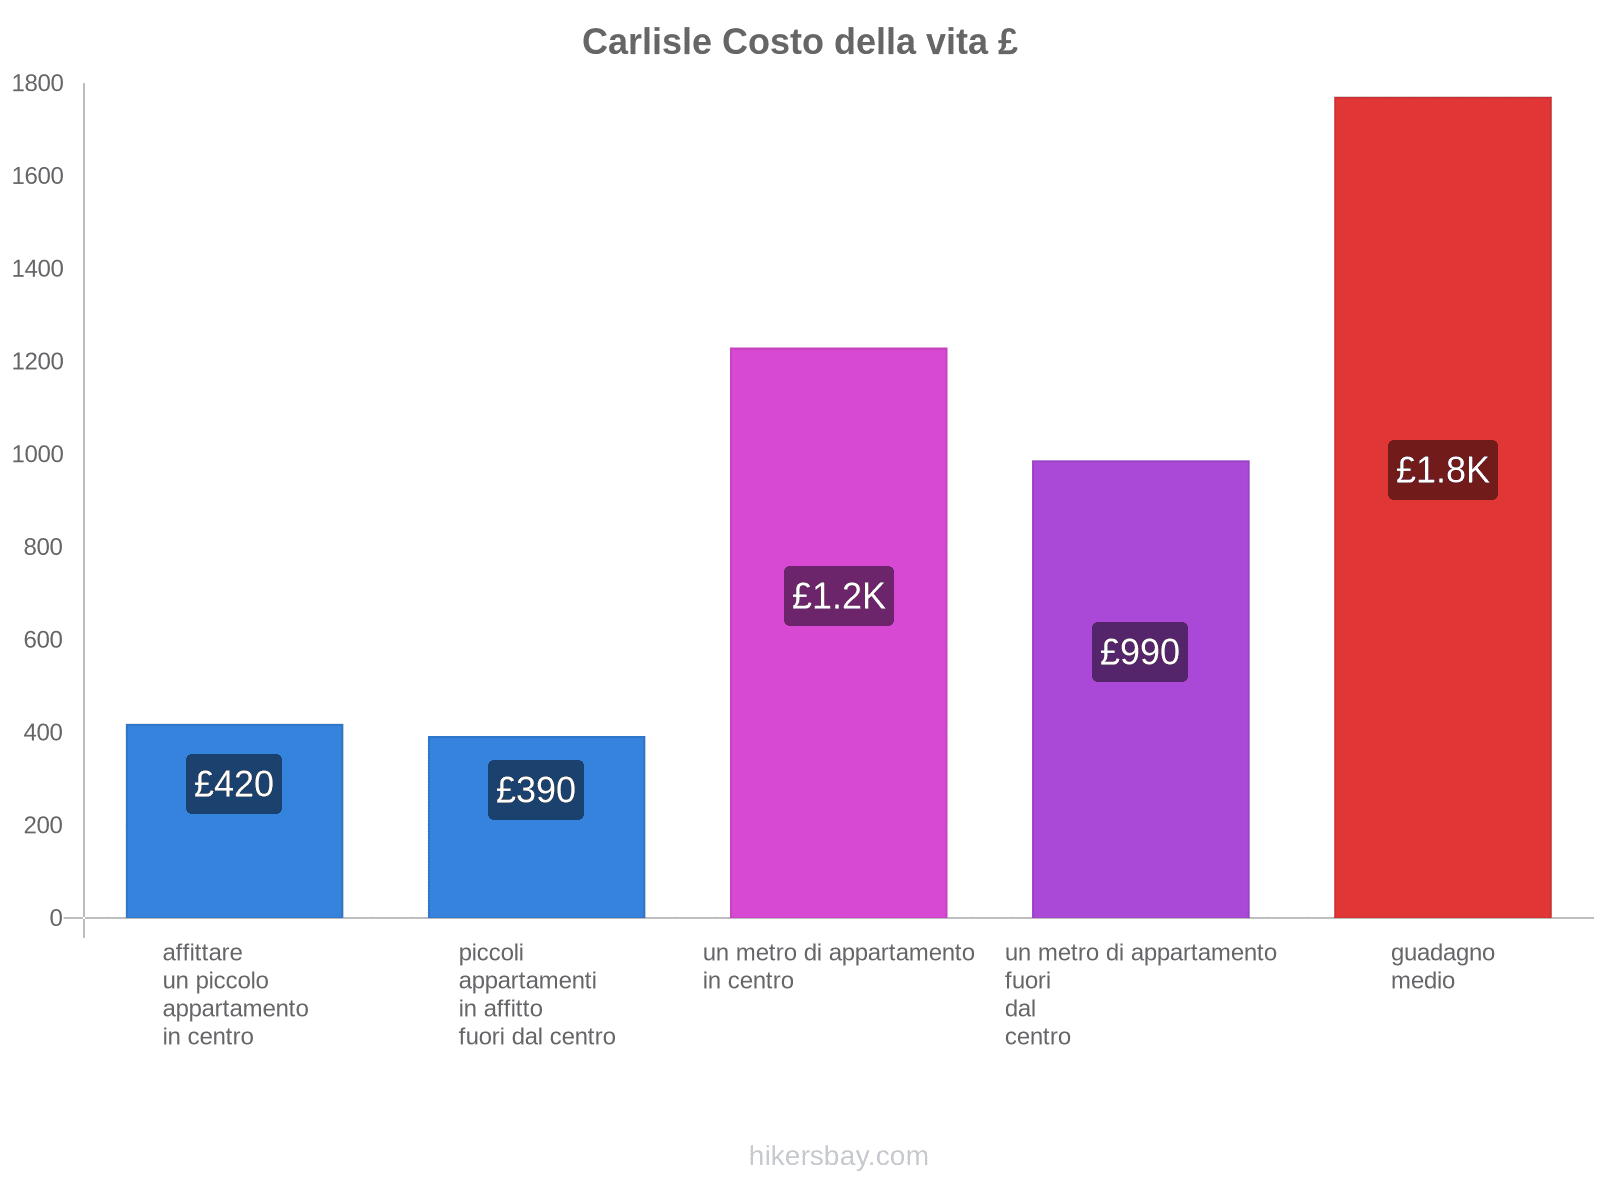 Carlisle costo della vita hikersbay.com